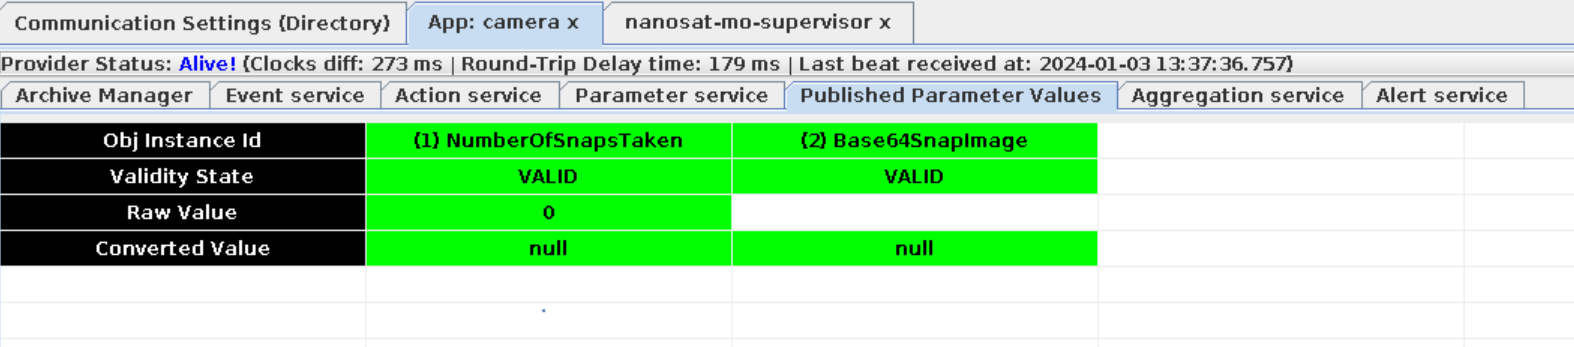 Nanosat Services